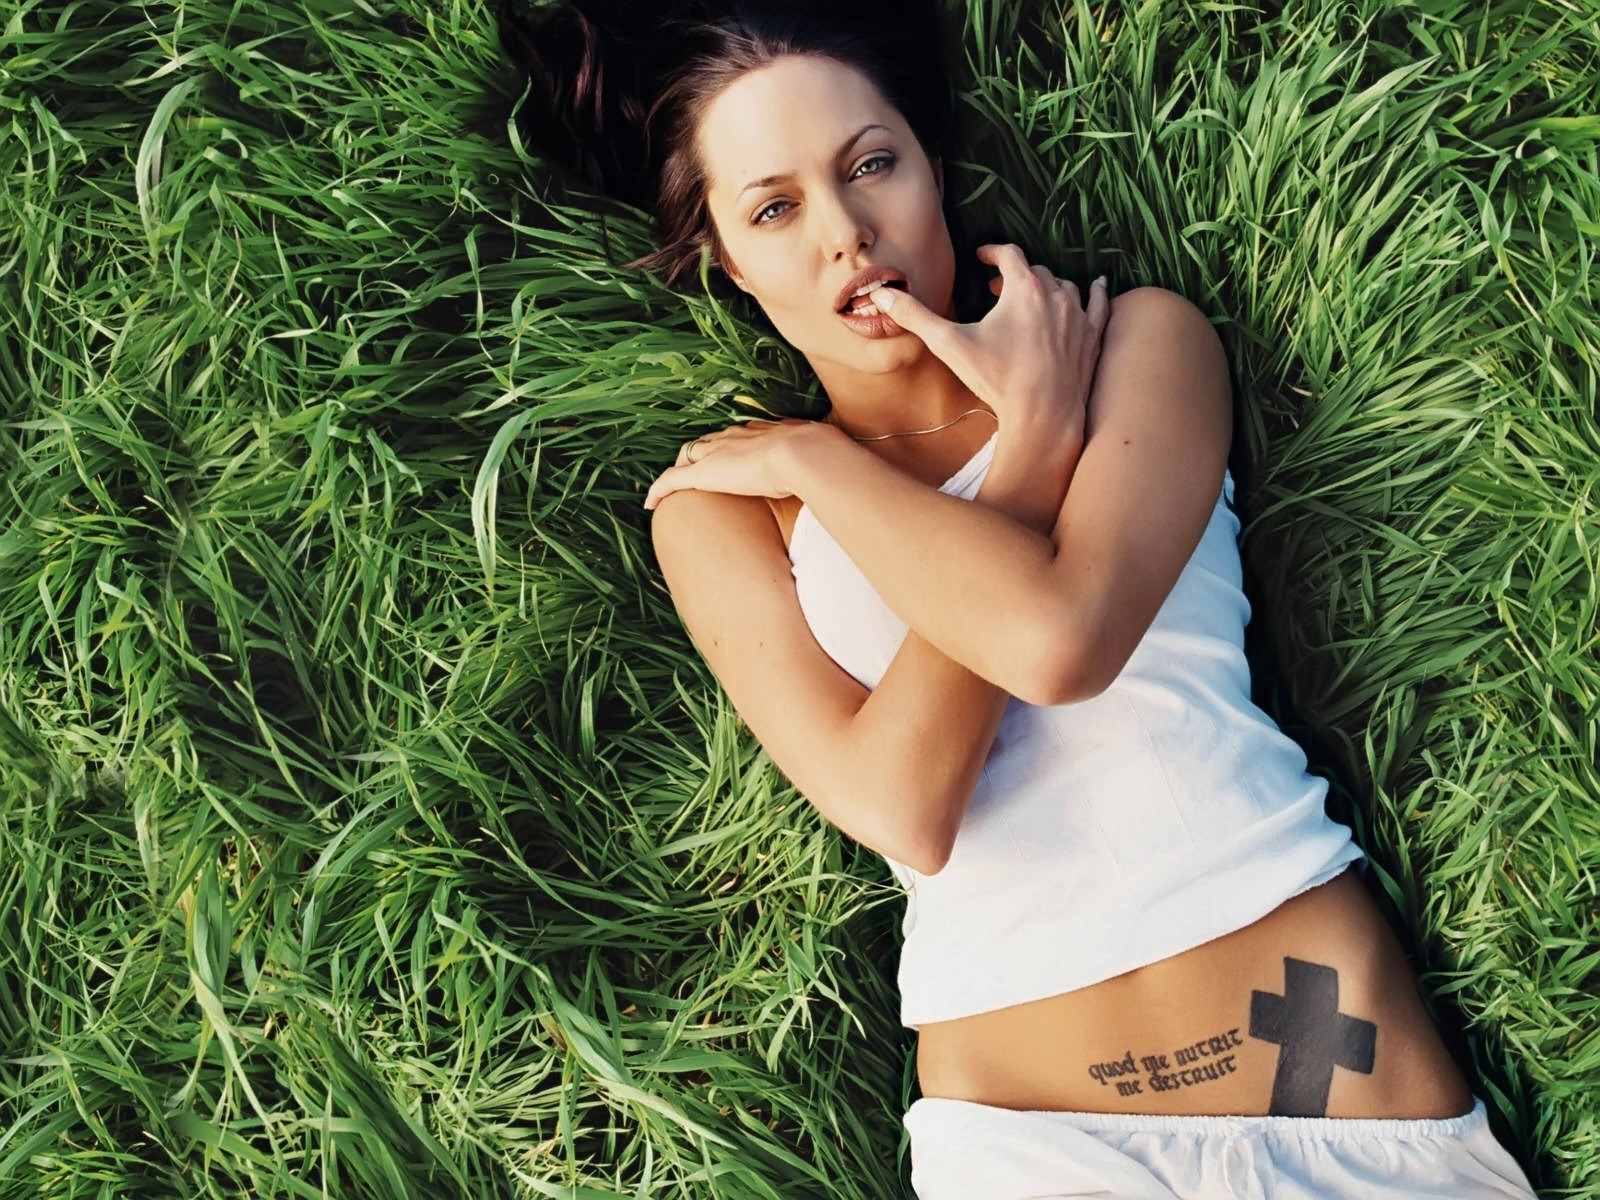 Fond d'ecran Angelina Jolie dans l'herbe